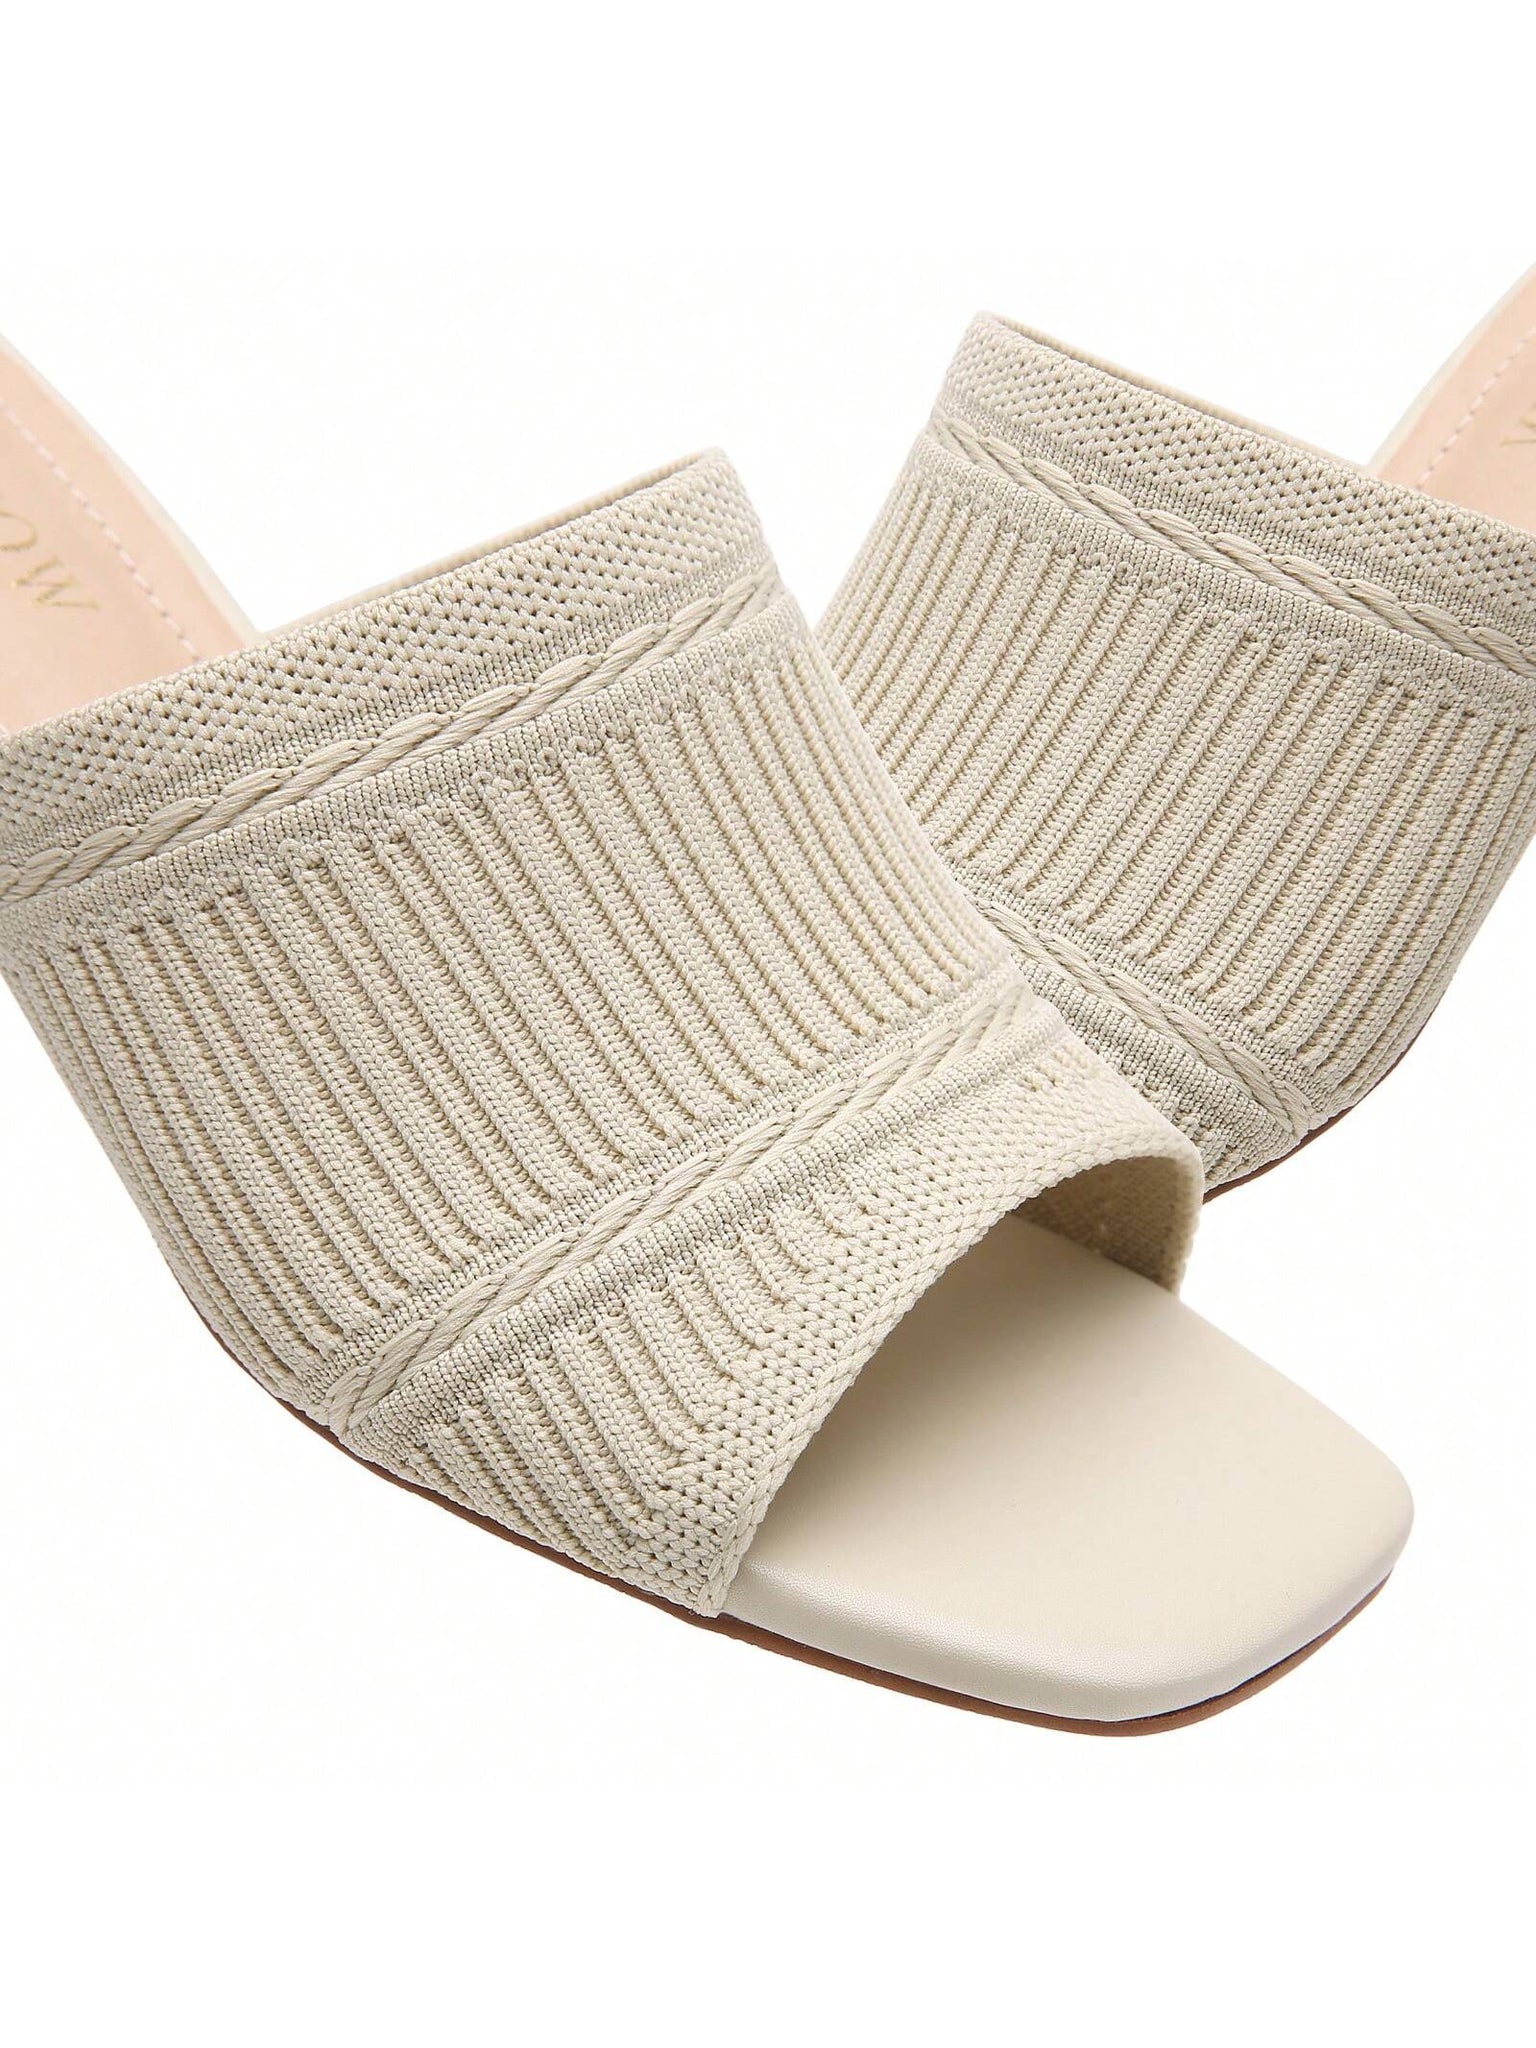 Tilocow Knit Heeled Sandals Chunky Low Block Heel Mules For Women Square Open Toe Heels Slip On Breathable Slides Sandal-Beige-8